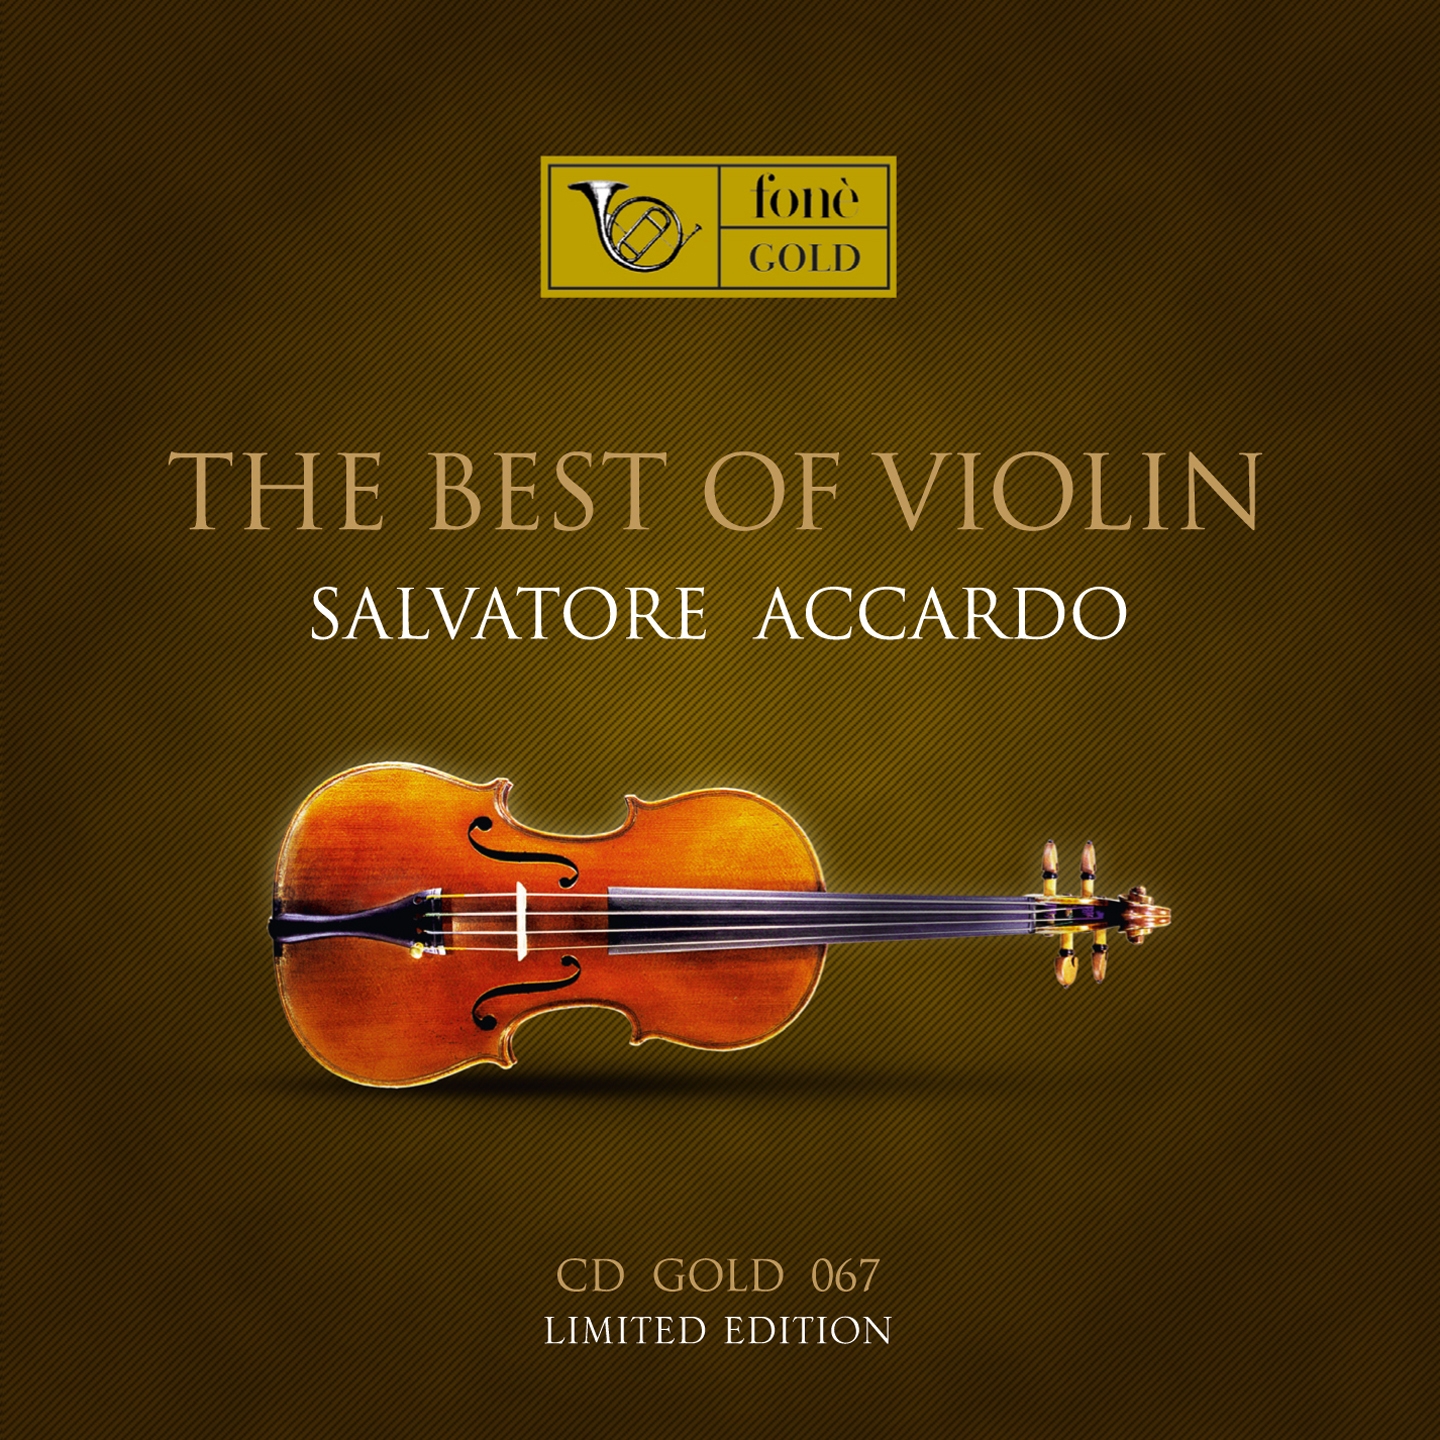 24 Capricci No. 13 in B-Flat Major, Op. 1 for Solo Violin: Allegro